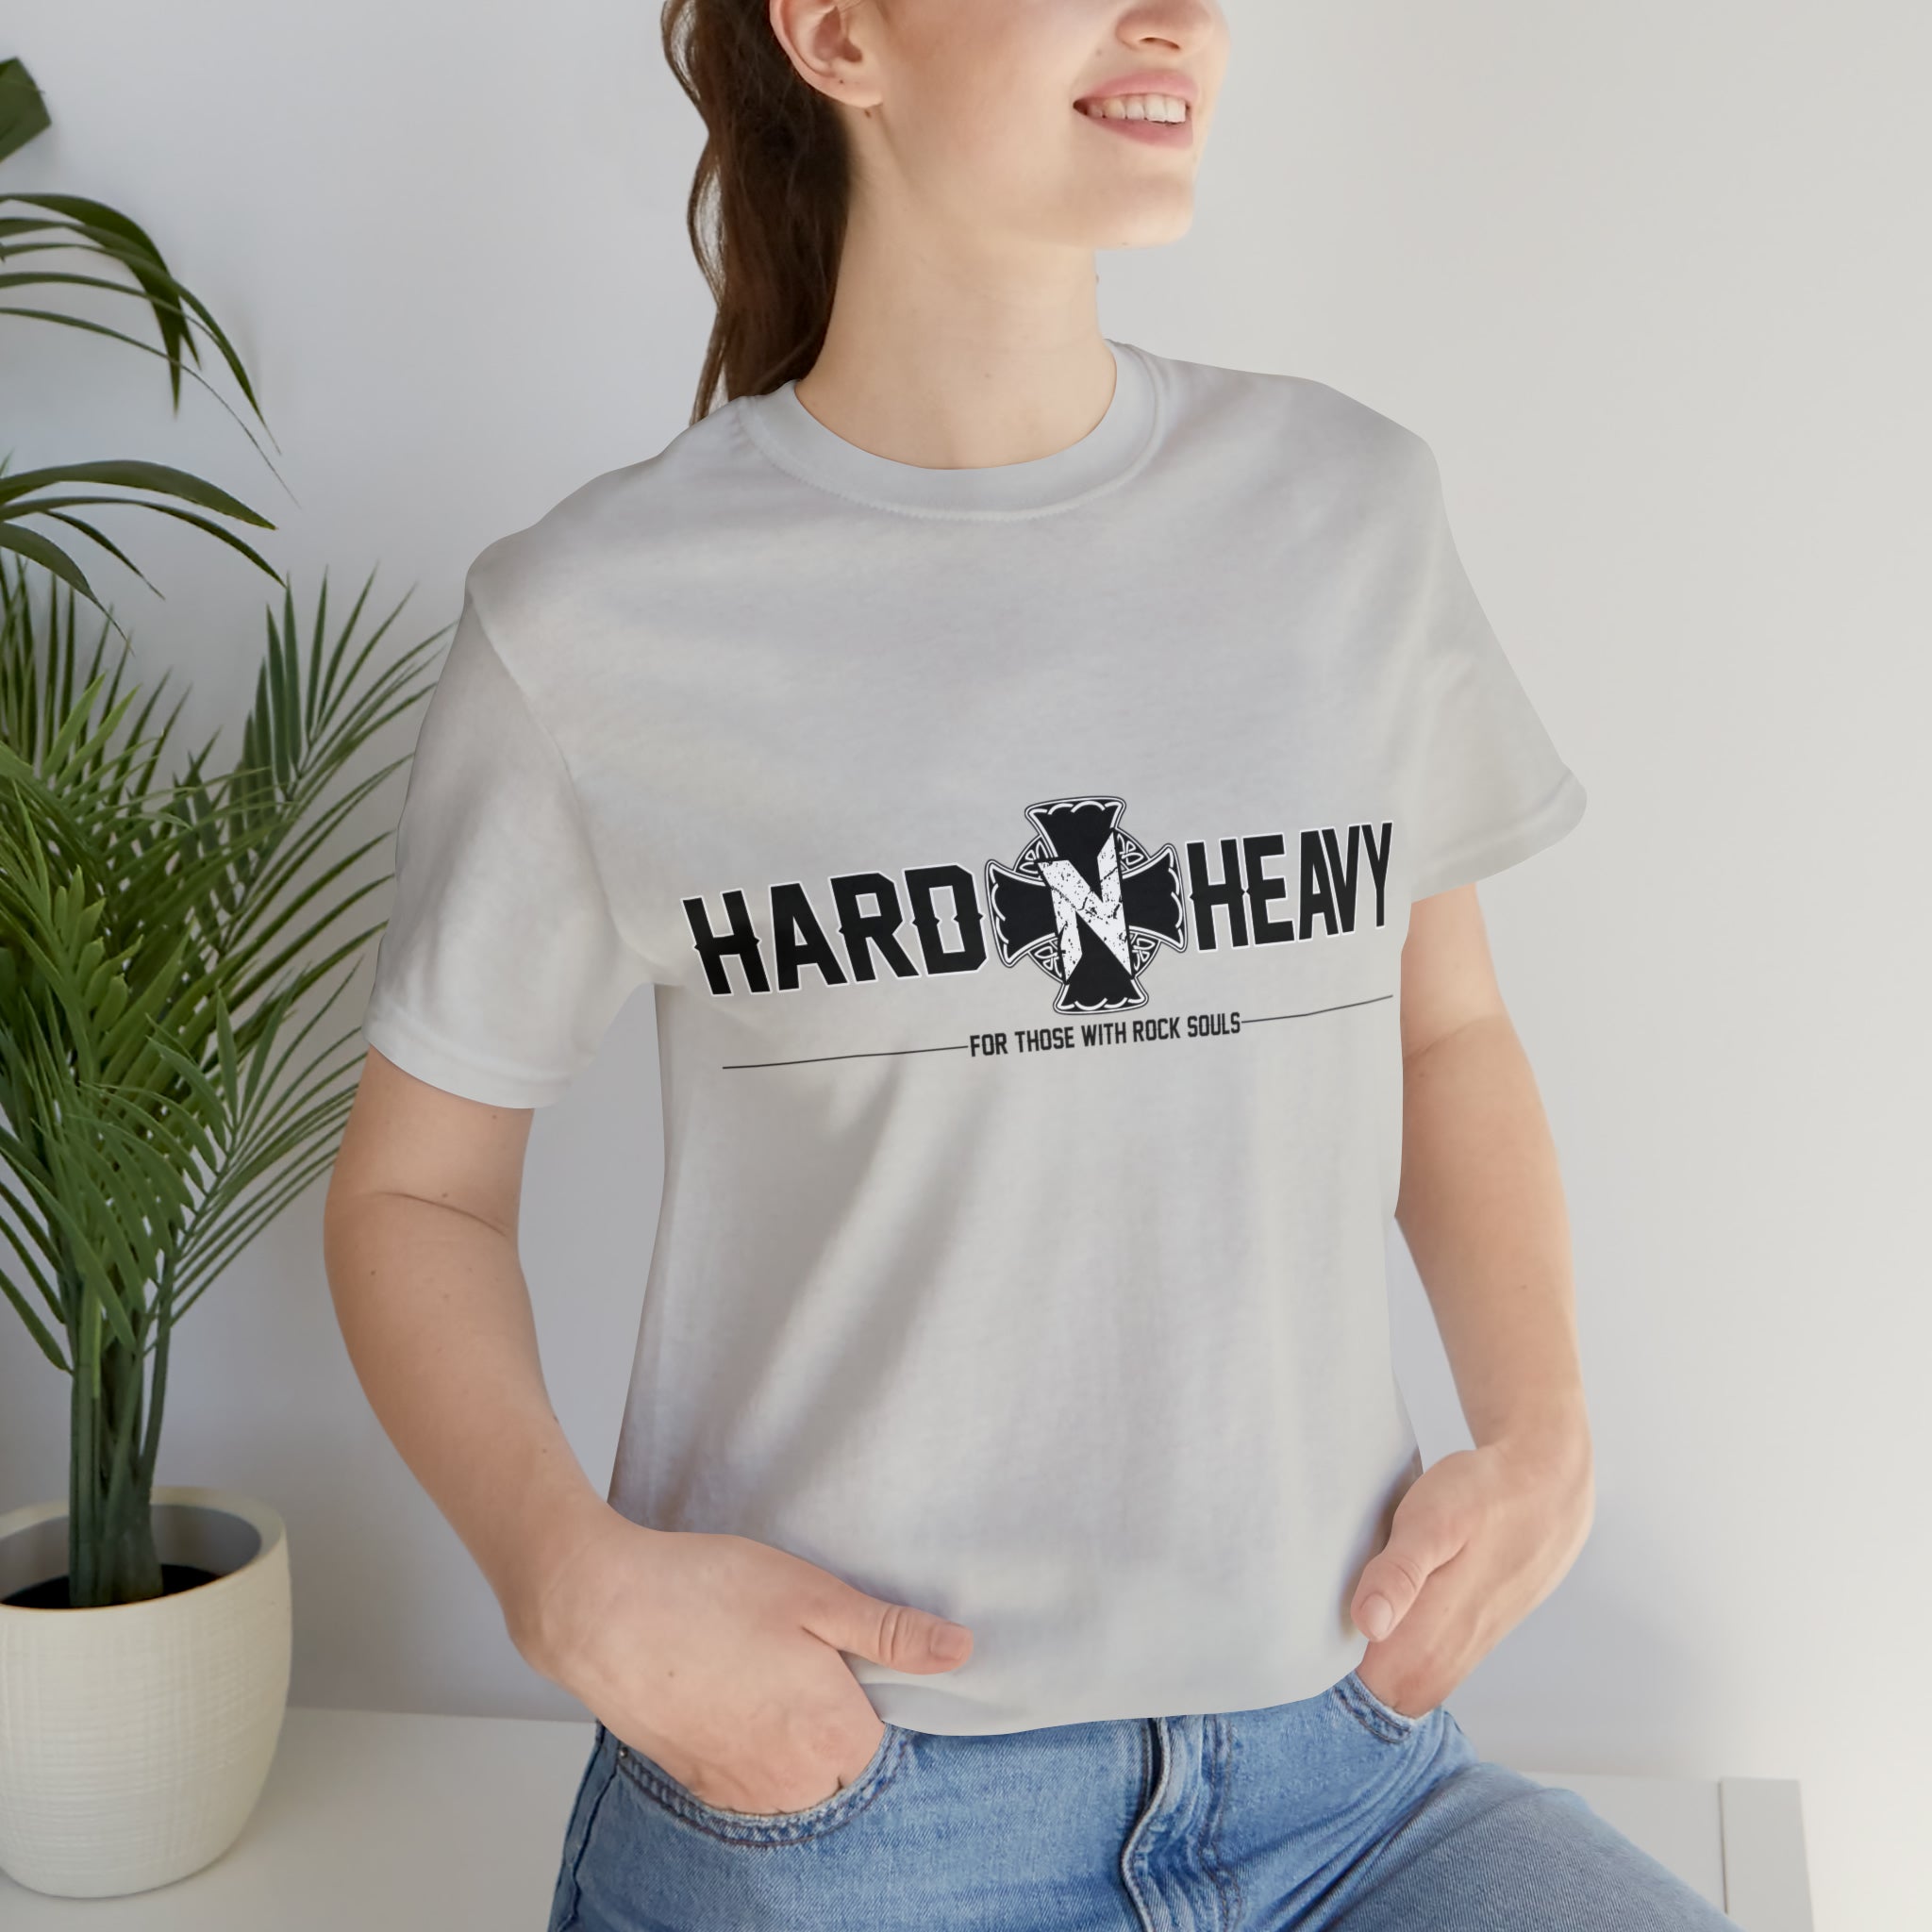 HARD'N'HEAVY Short Sleeve Tee for Women / Alternative Fashion Outfits - HARD'N'HEAVY